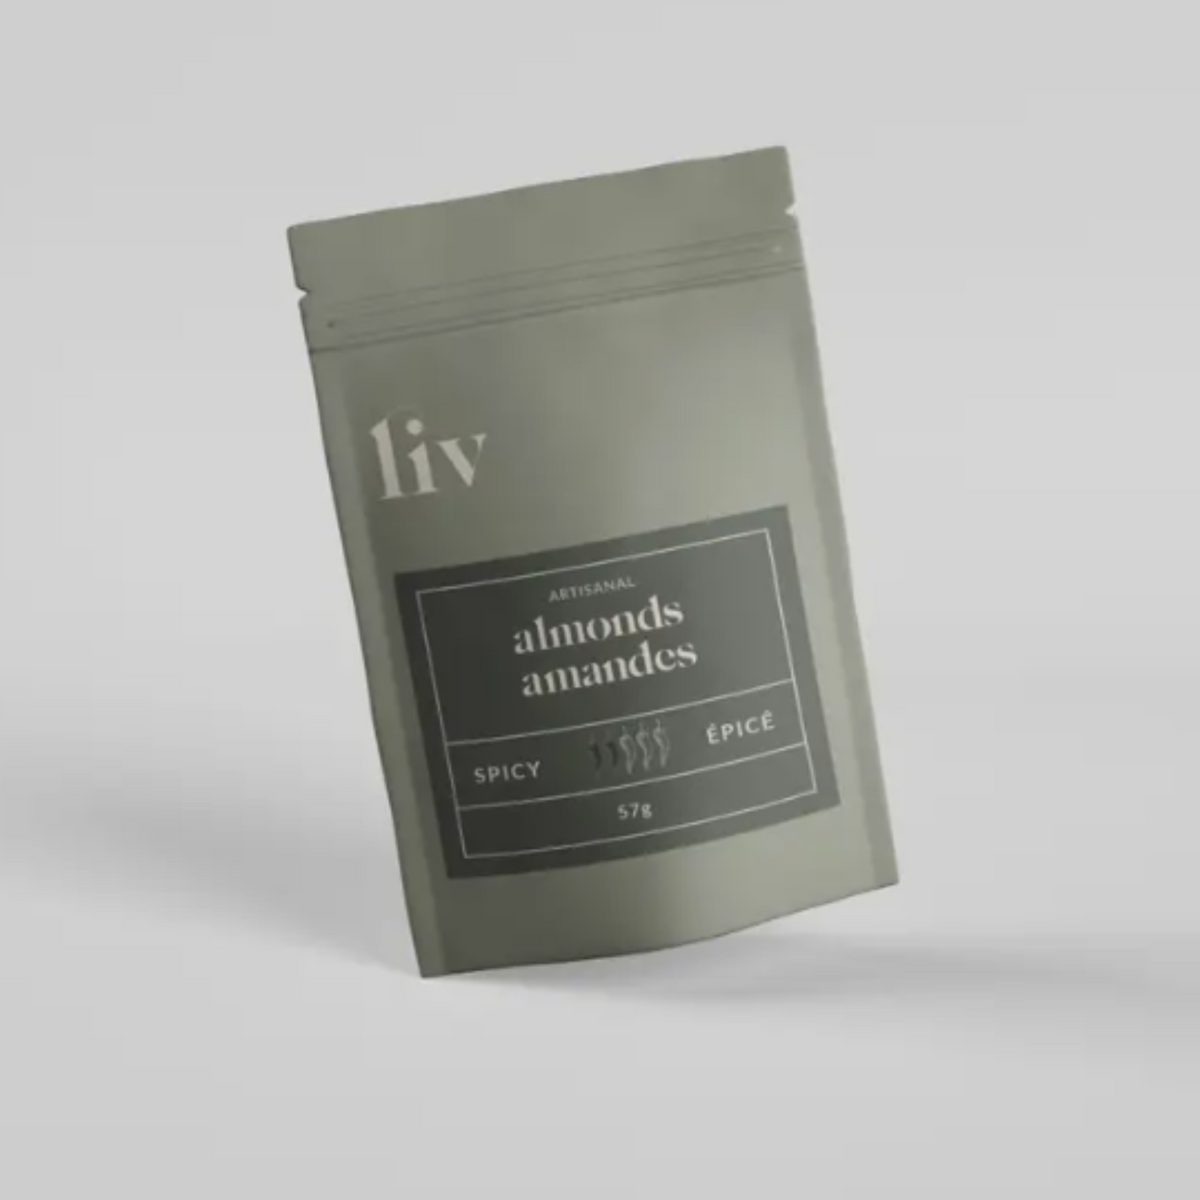 Liv Artisanal - Spicy Almonds